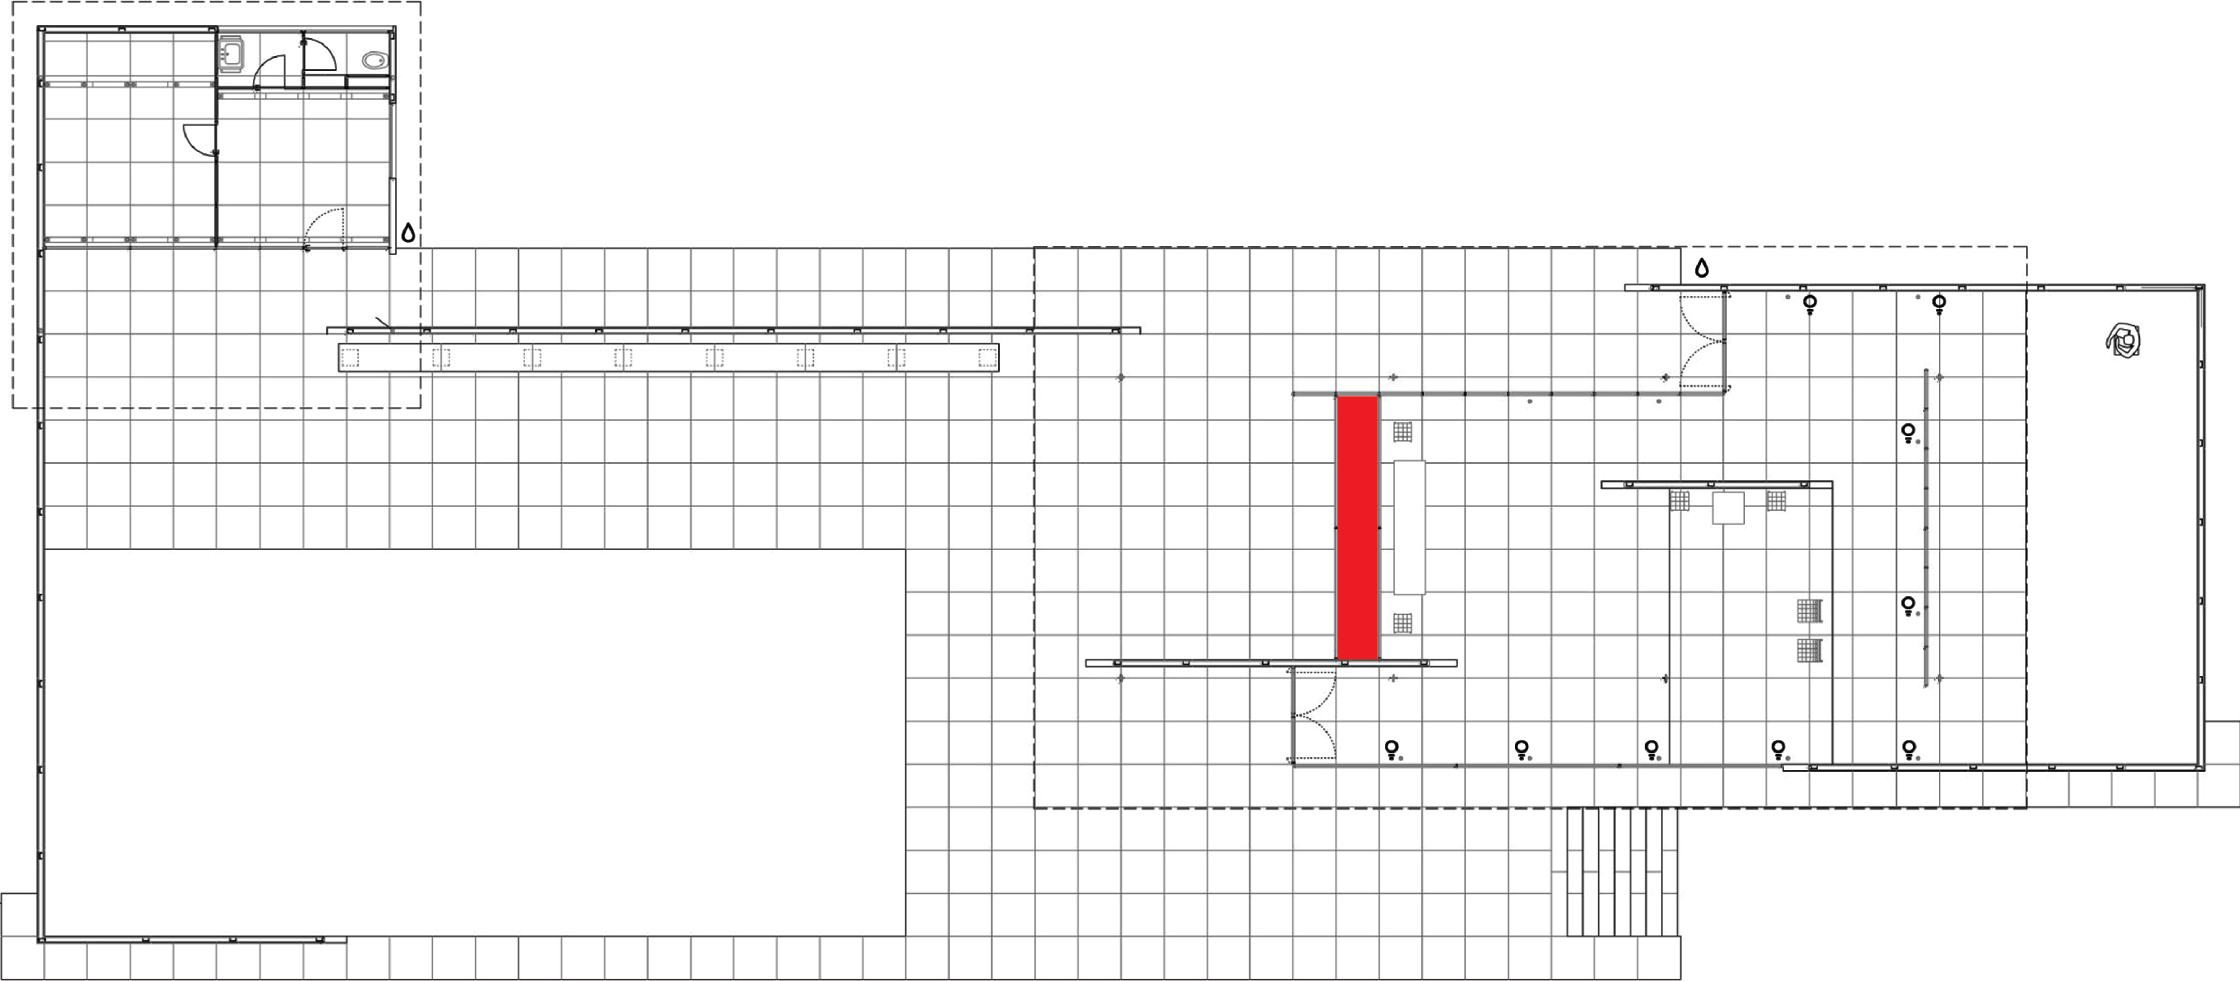 Barcelona Pavilion Floor Plan Dimensions Floorplans Click